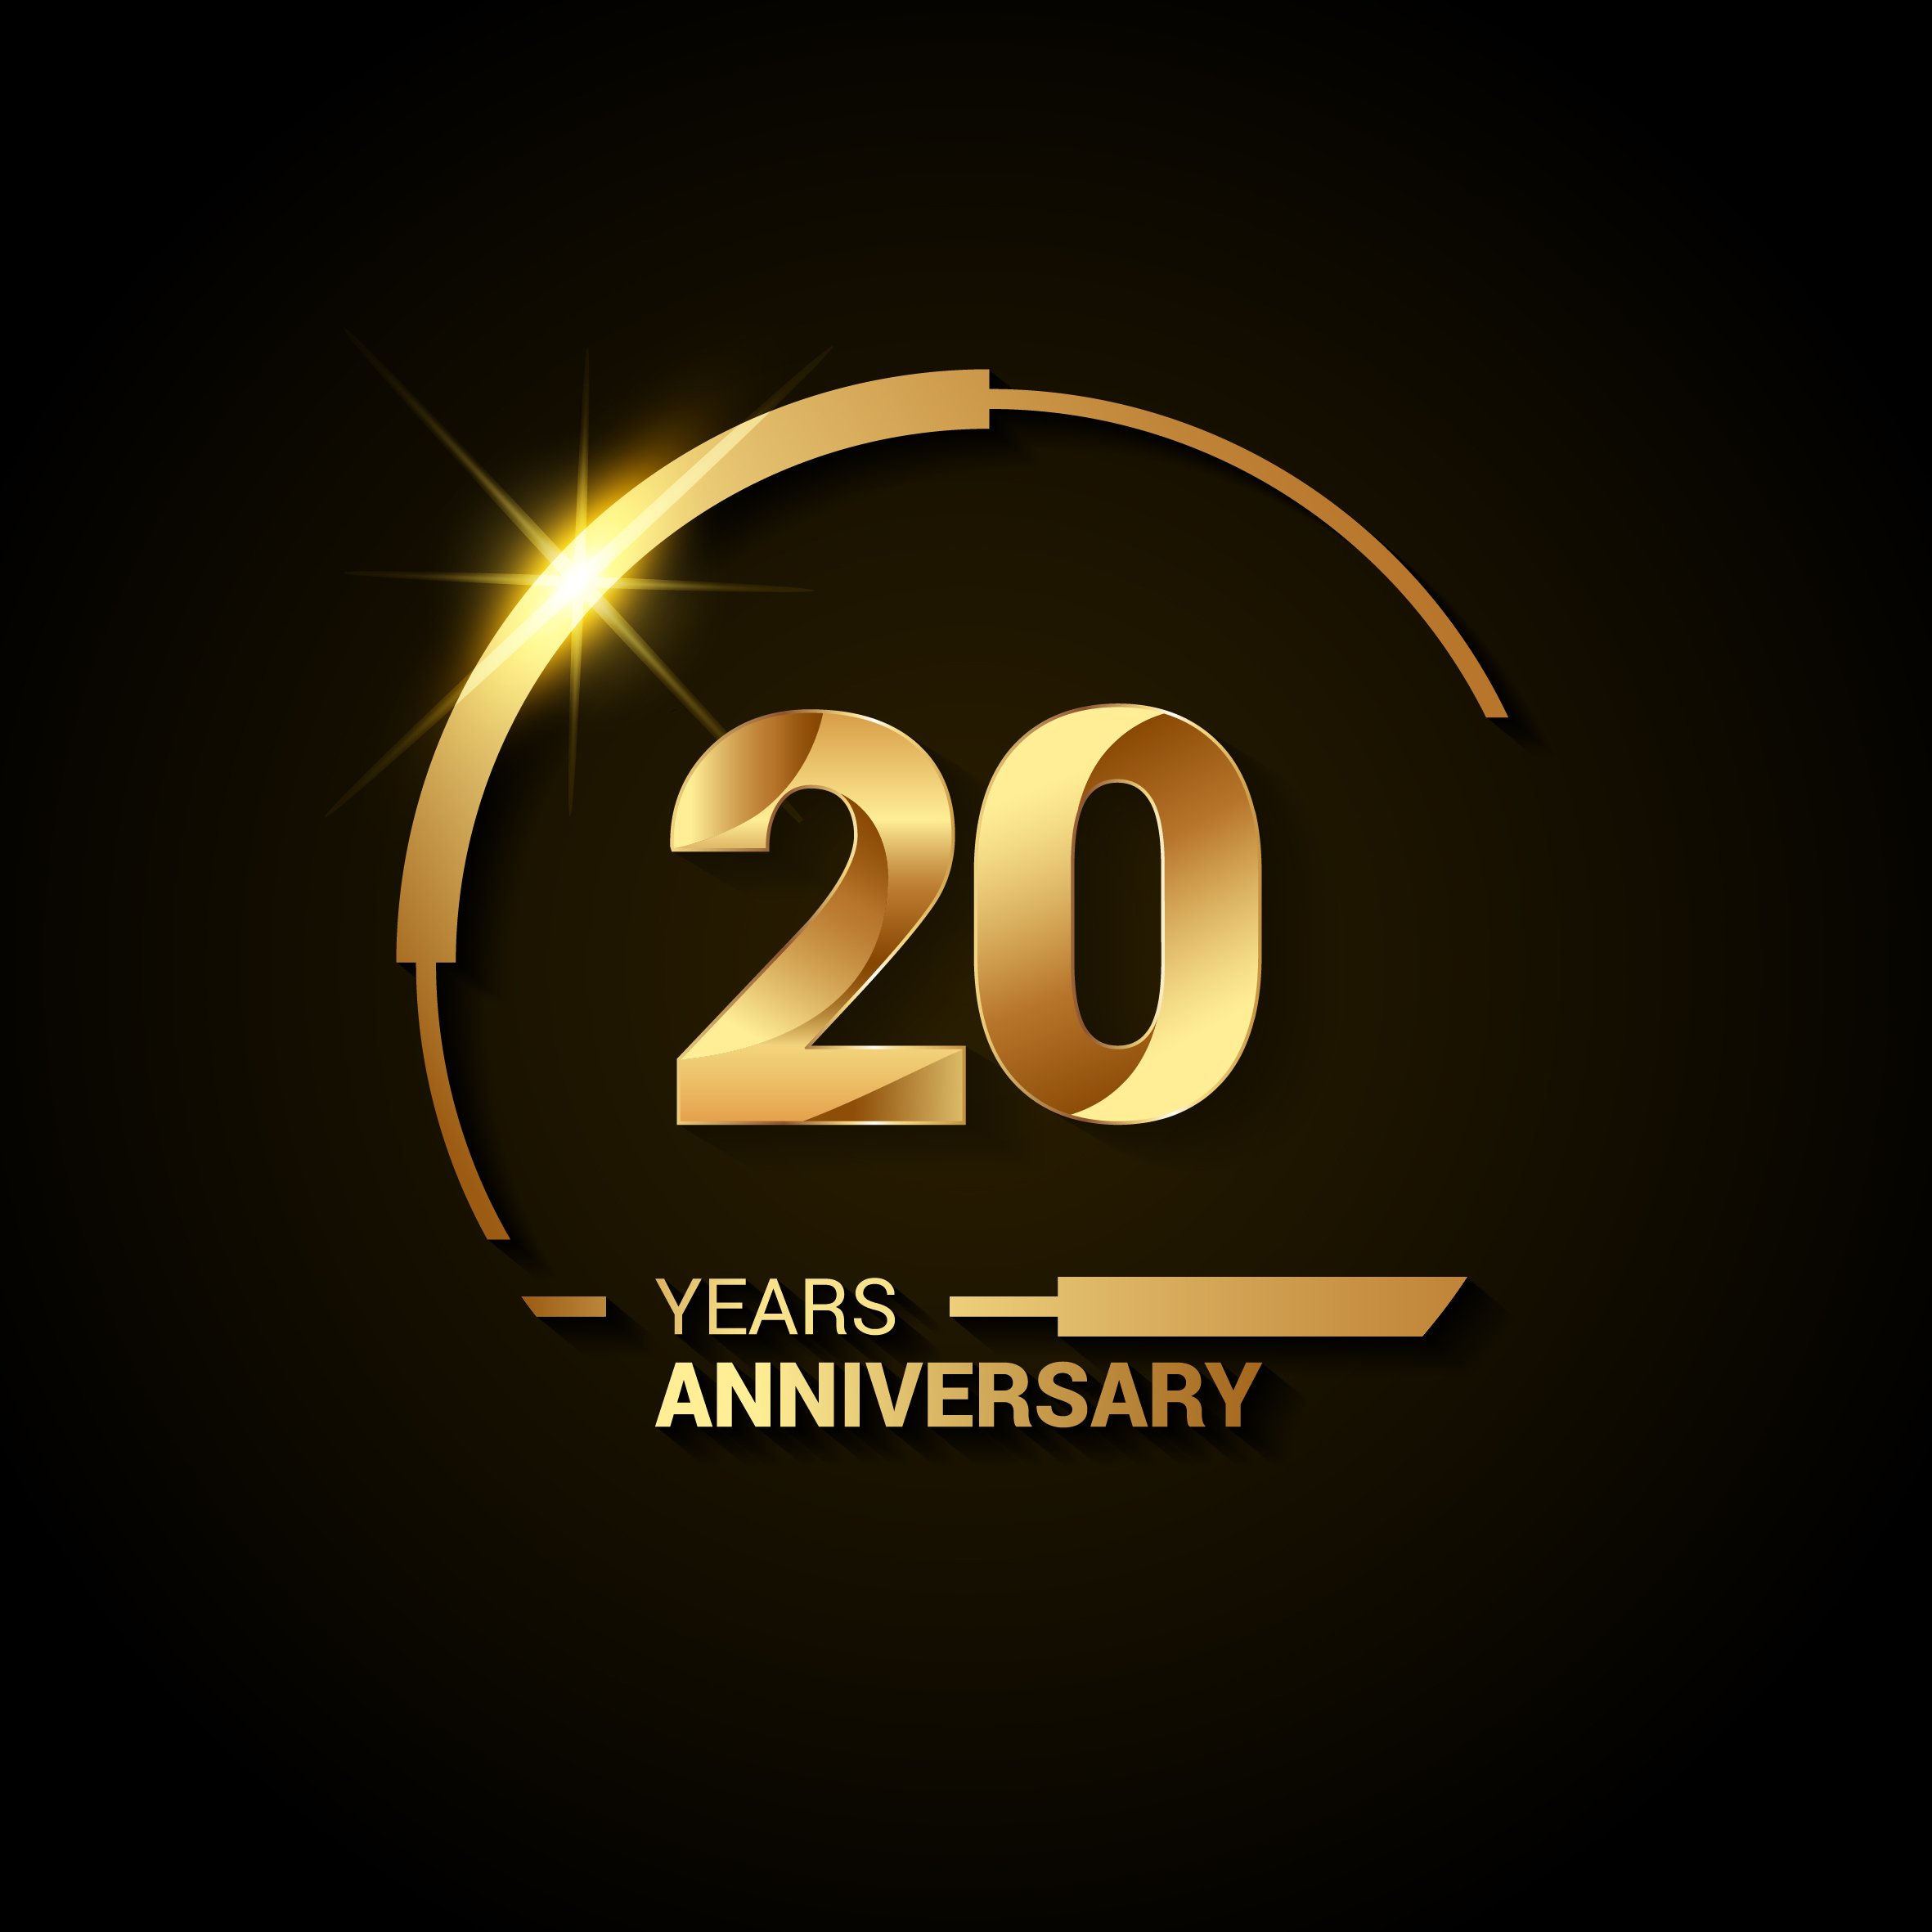 TRAVEK, INC Celebrates its 20th Anniversary